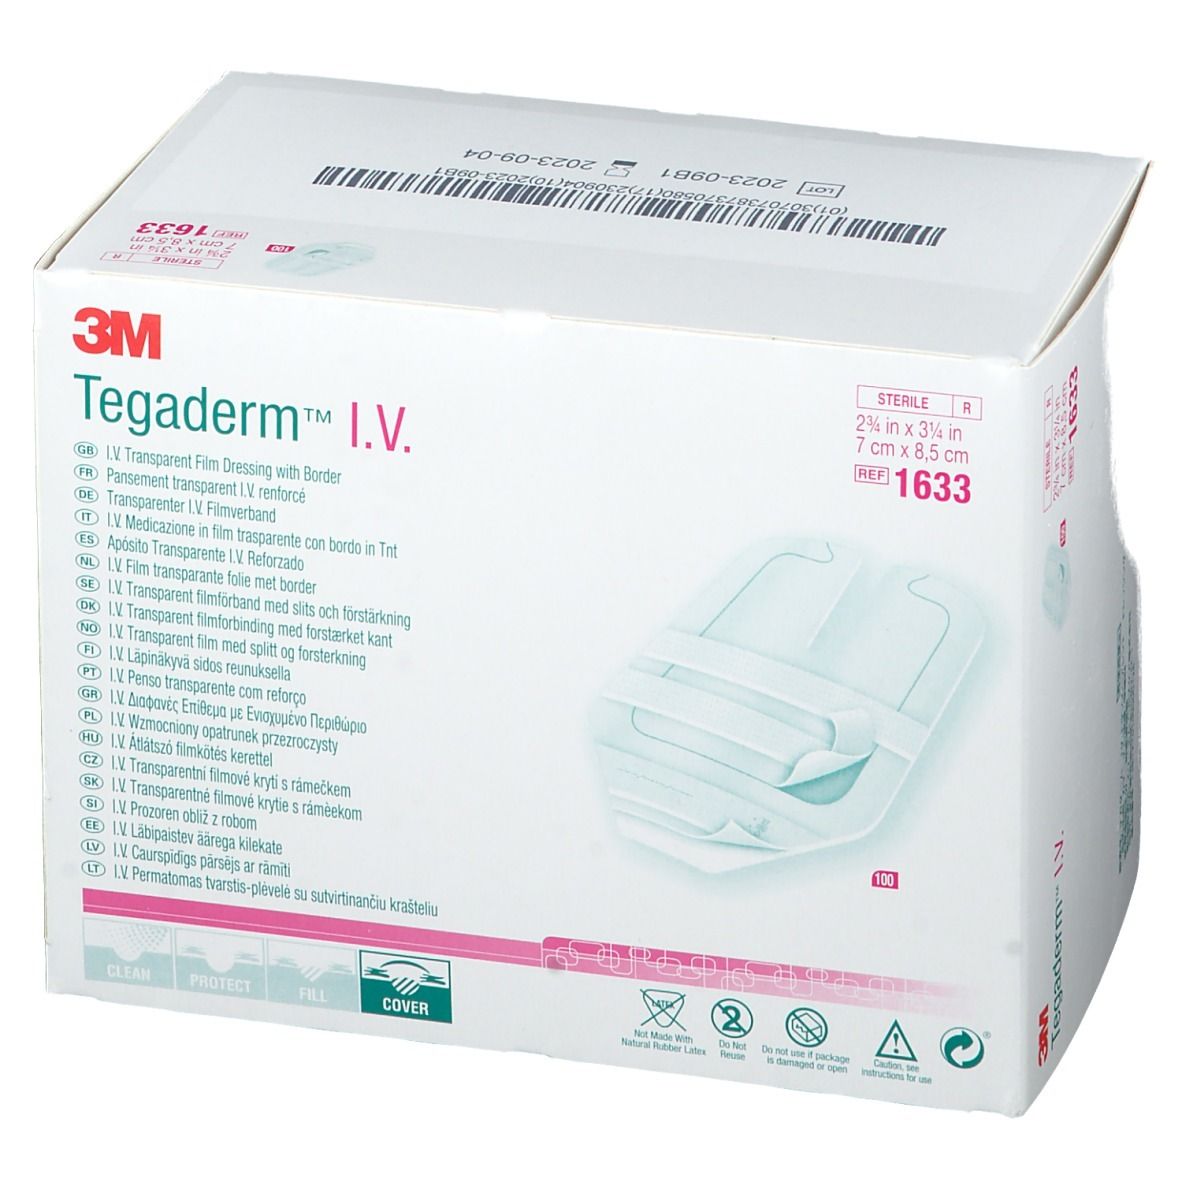 3M Tegaderm™ I.V.-Fixierverband, 7 cm x 8,5 cm